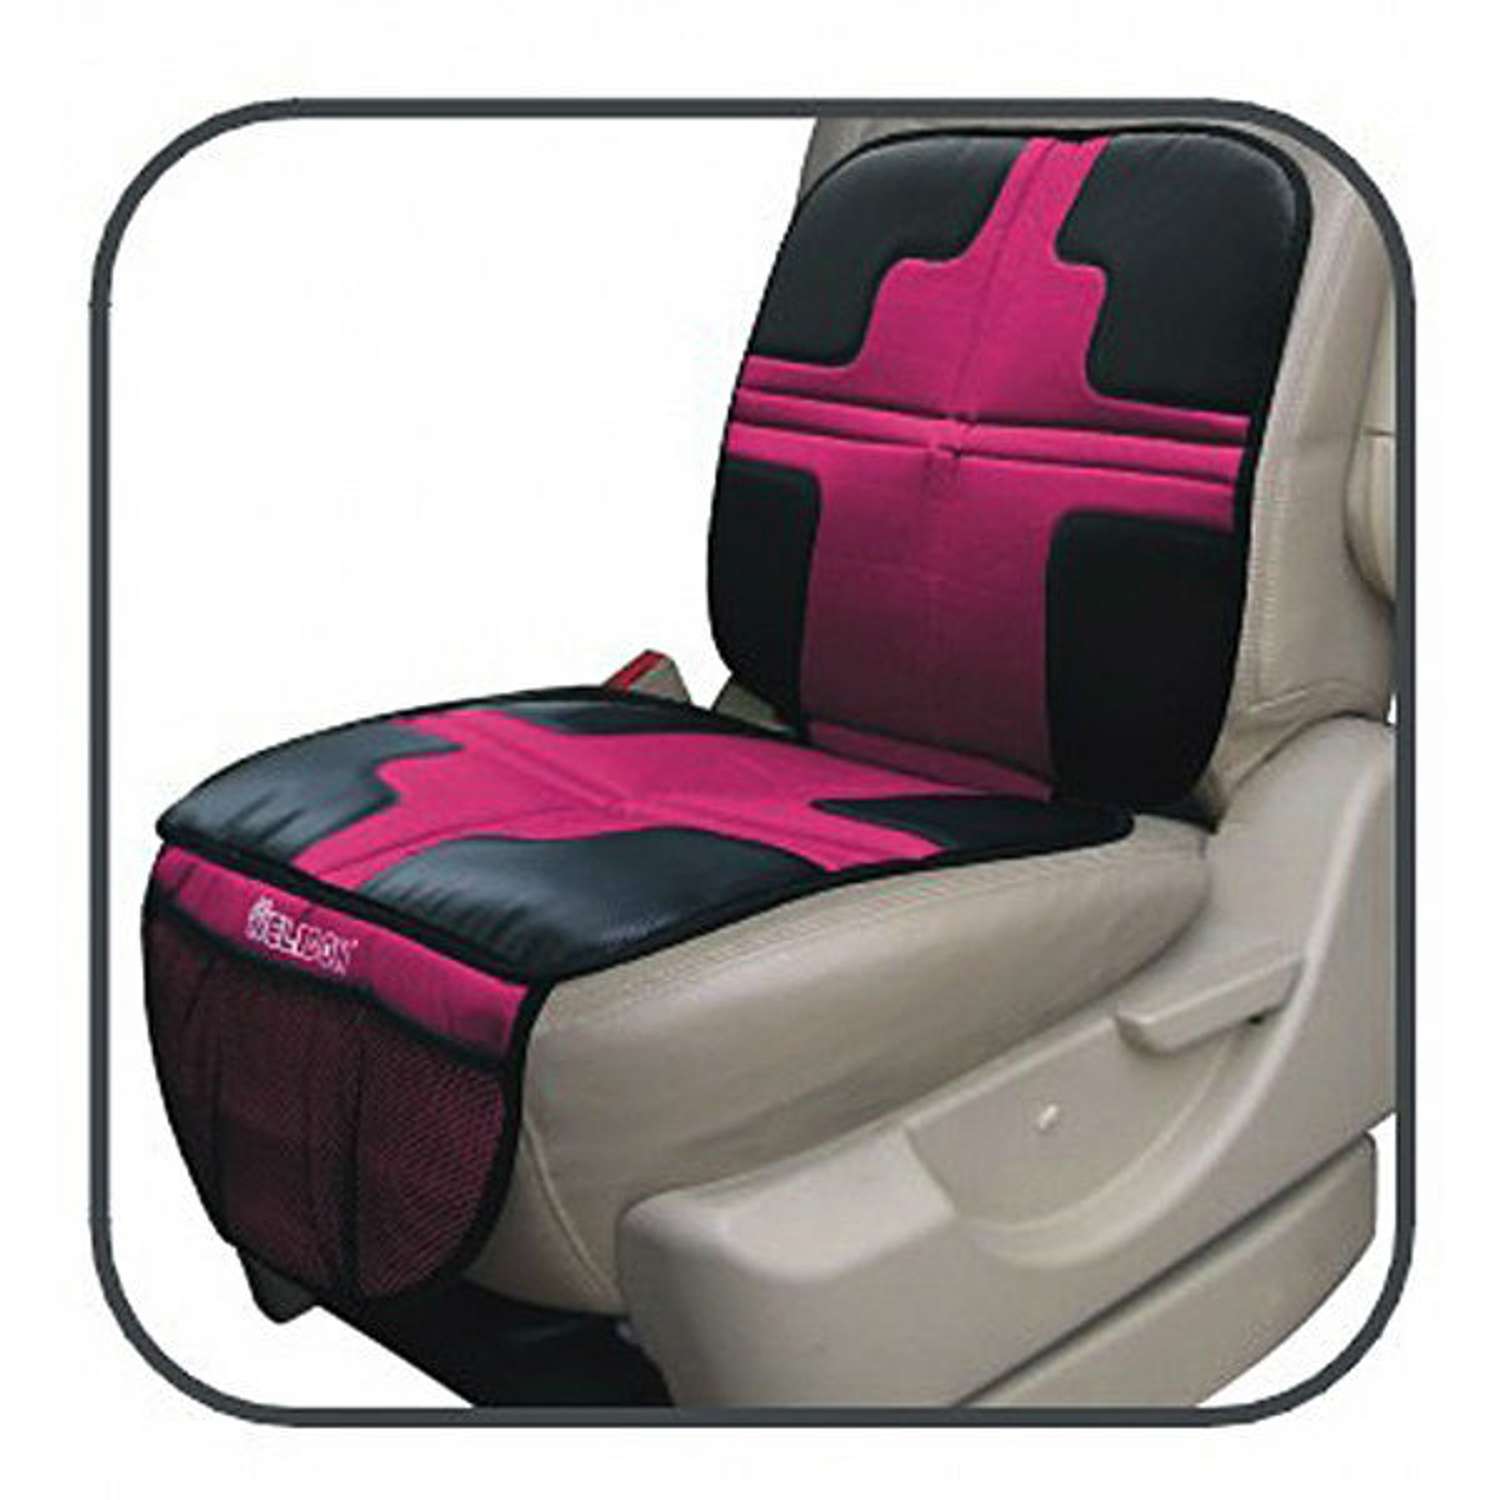 Набор для автомобиля Welldon коврик + органайзер Розовый - фото 1